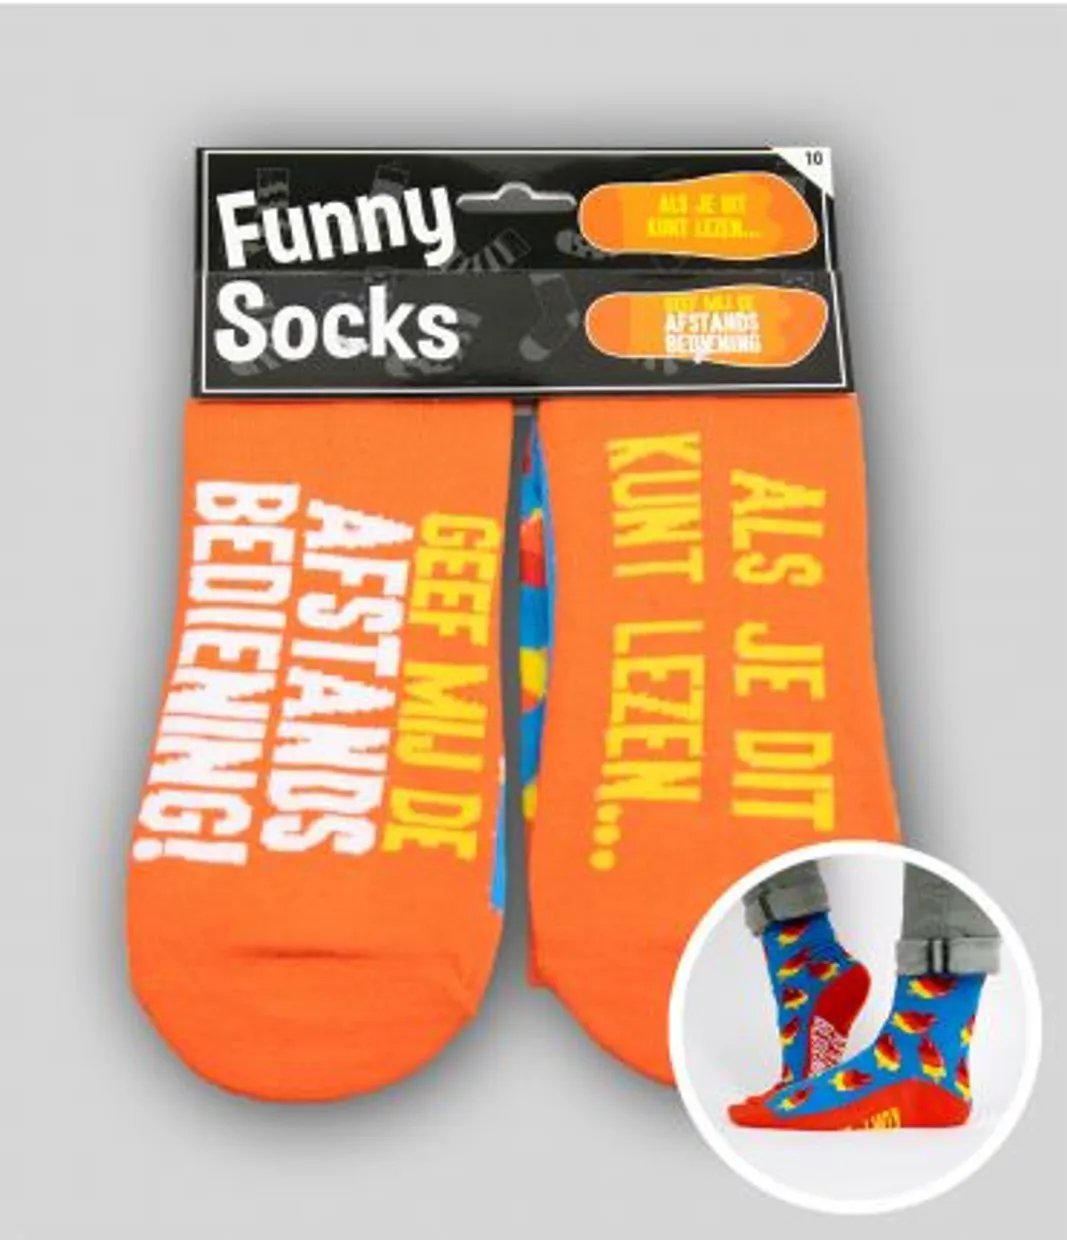 funny socks " ALS JE DIT KUNT LEZEN......"